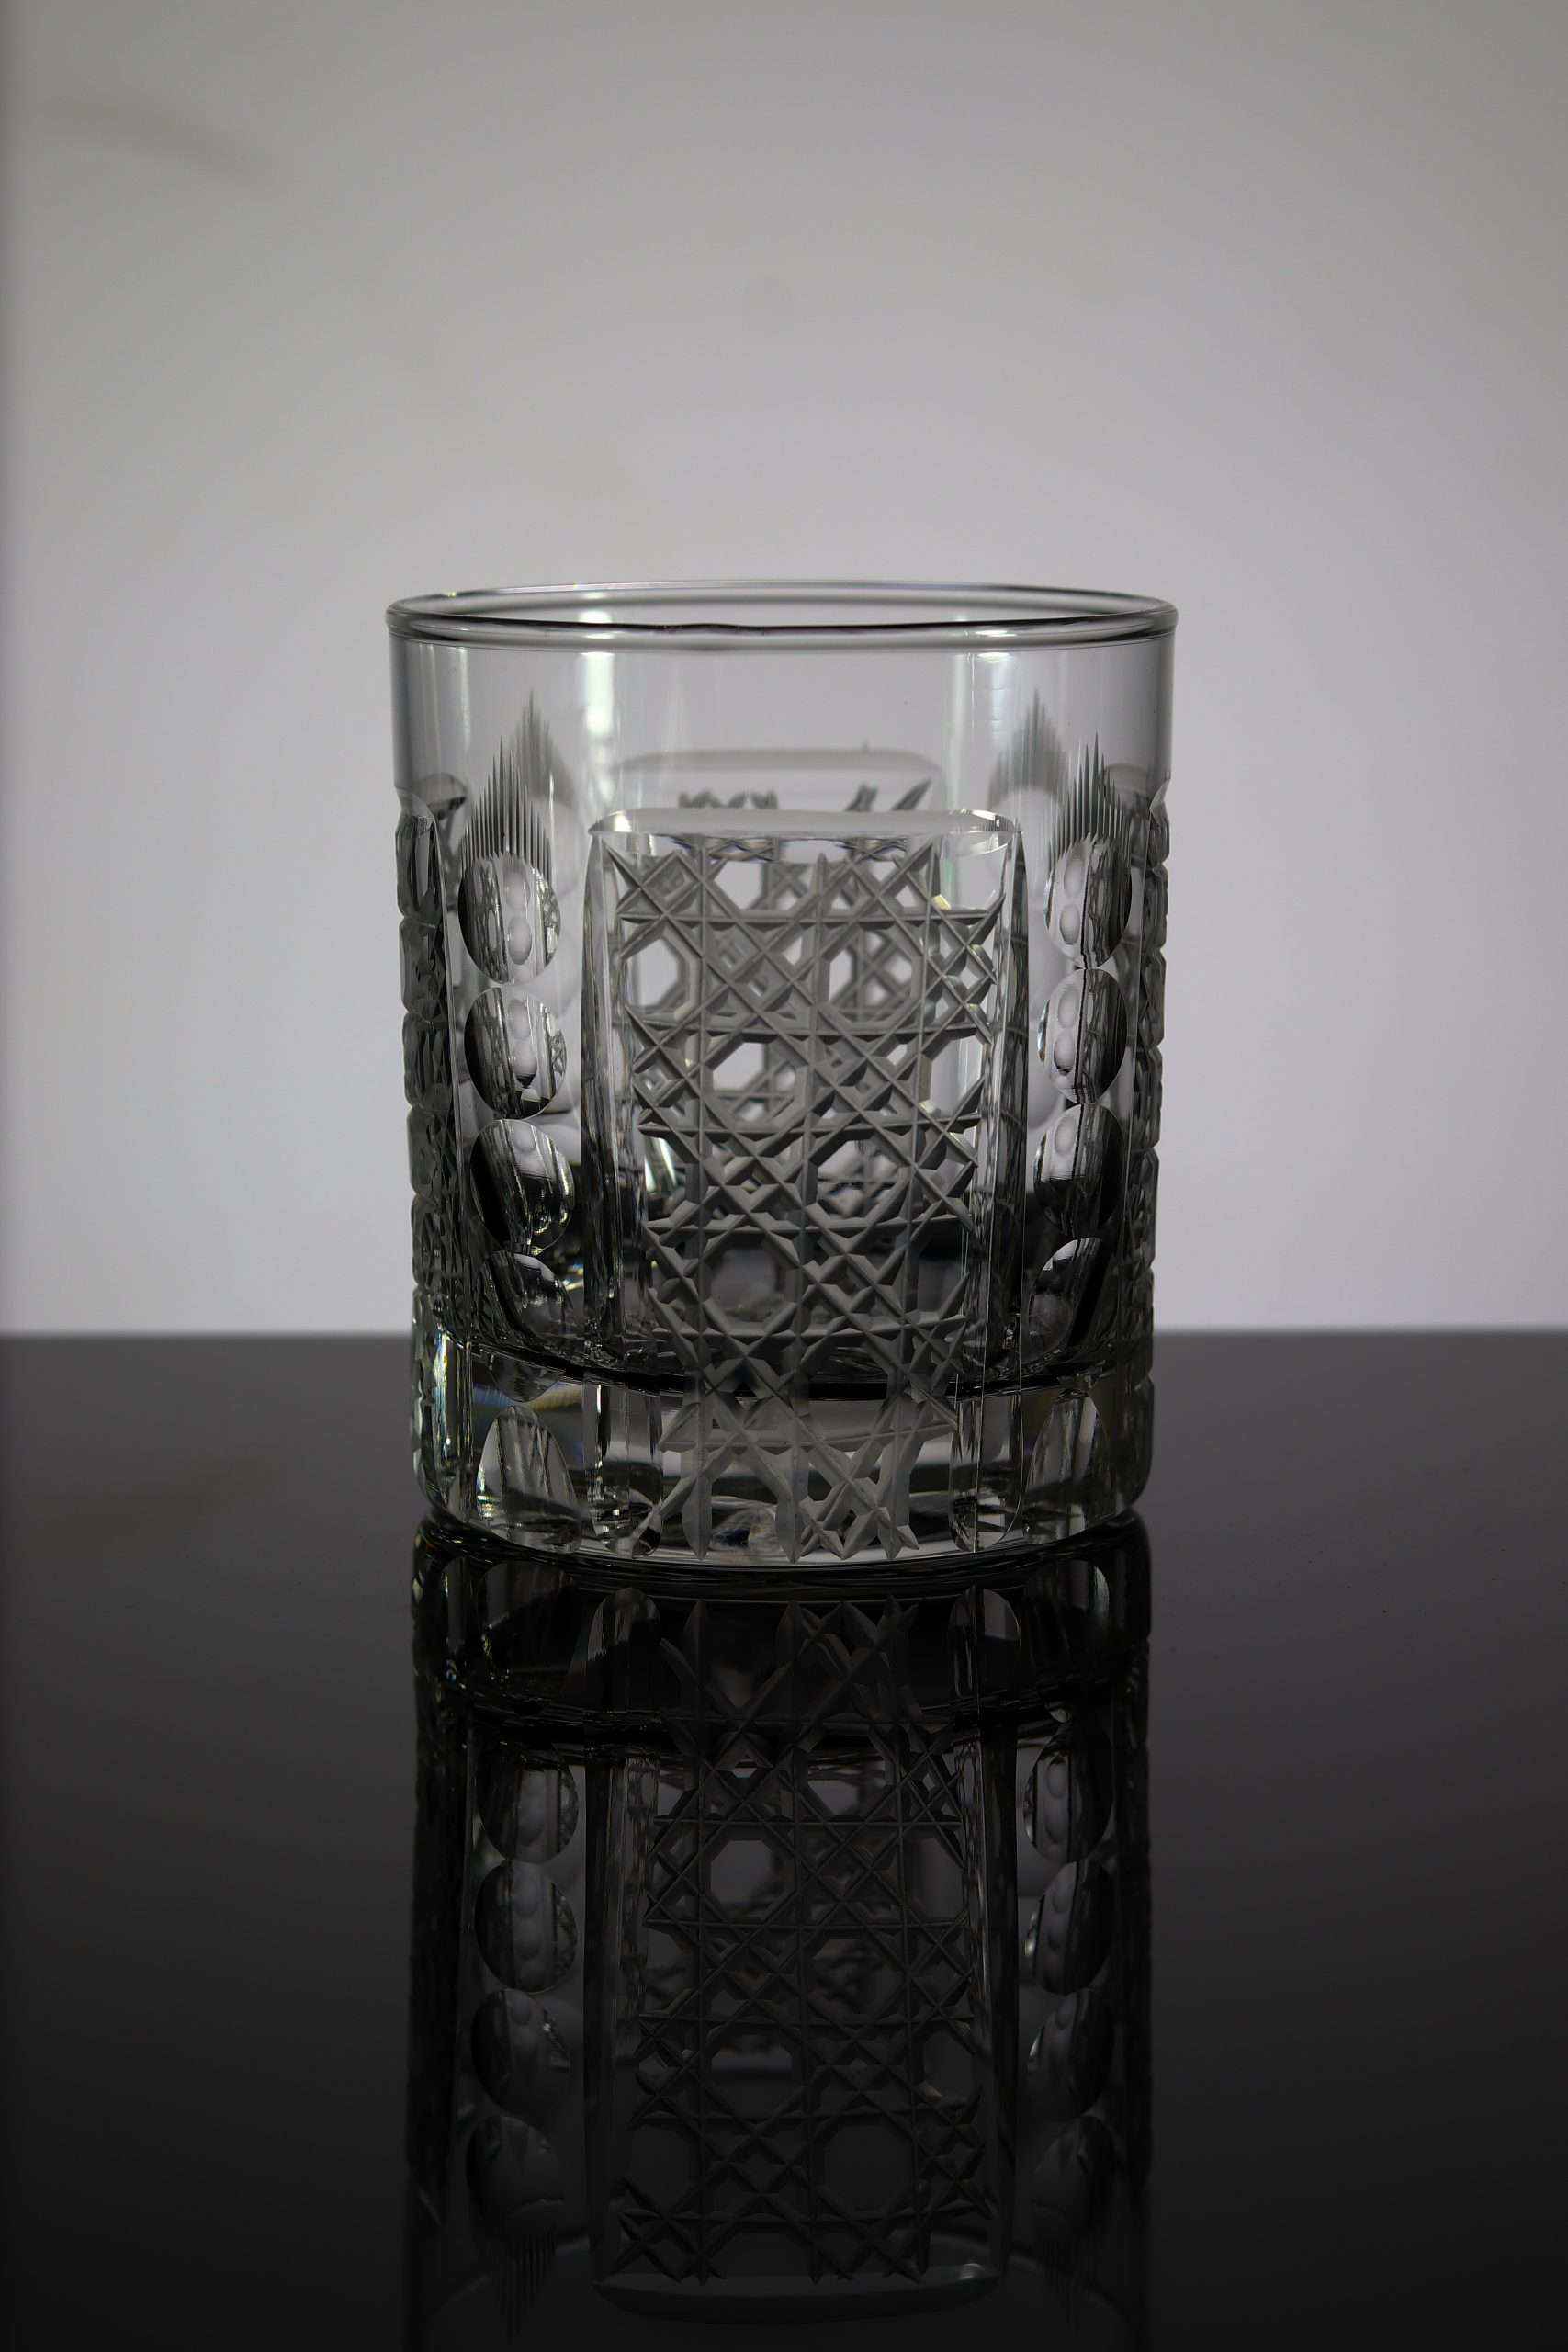 Bubble Design Unique Whiskey Glasses